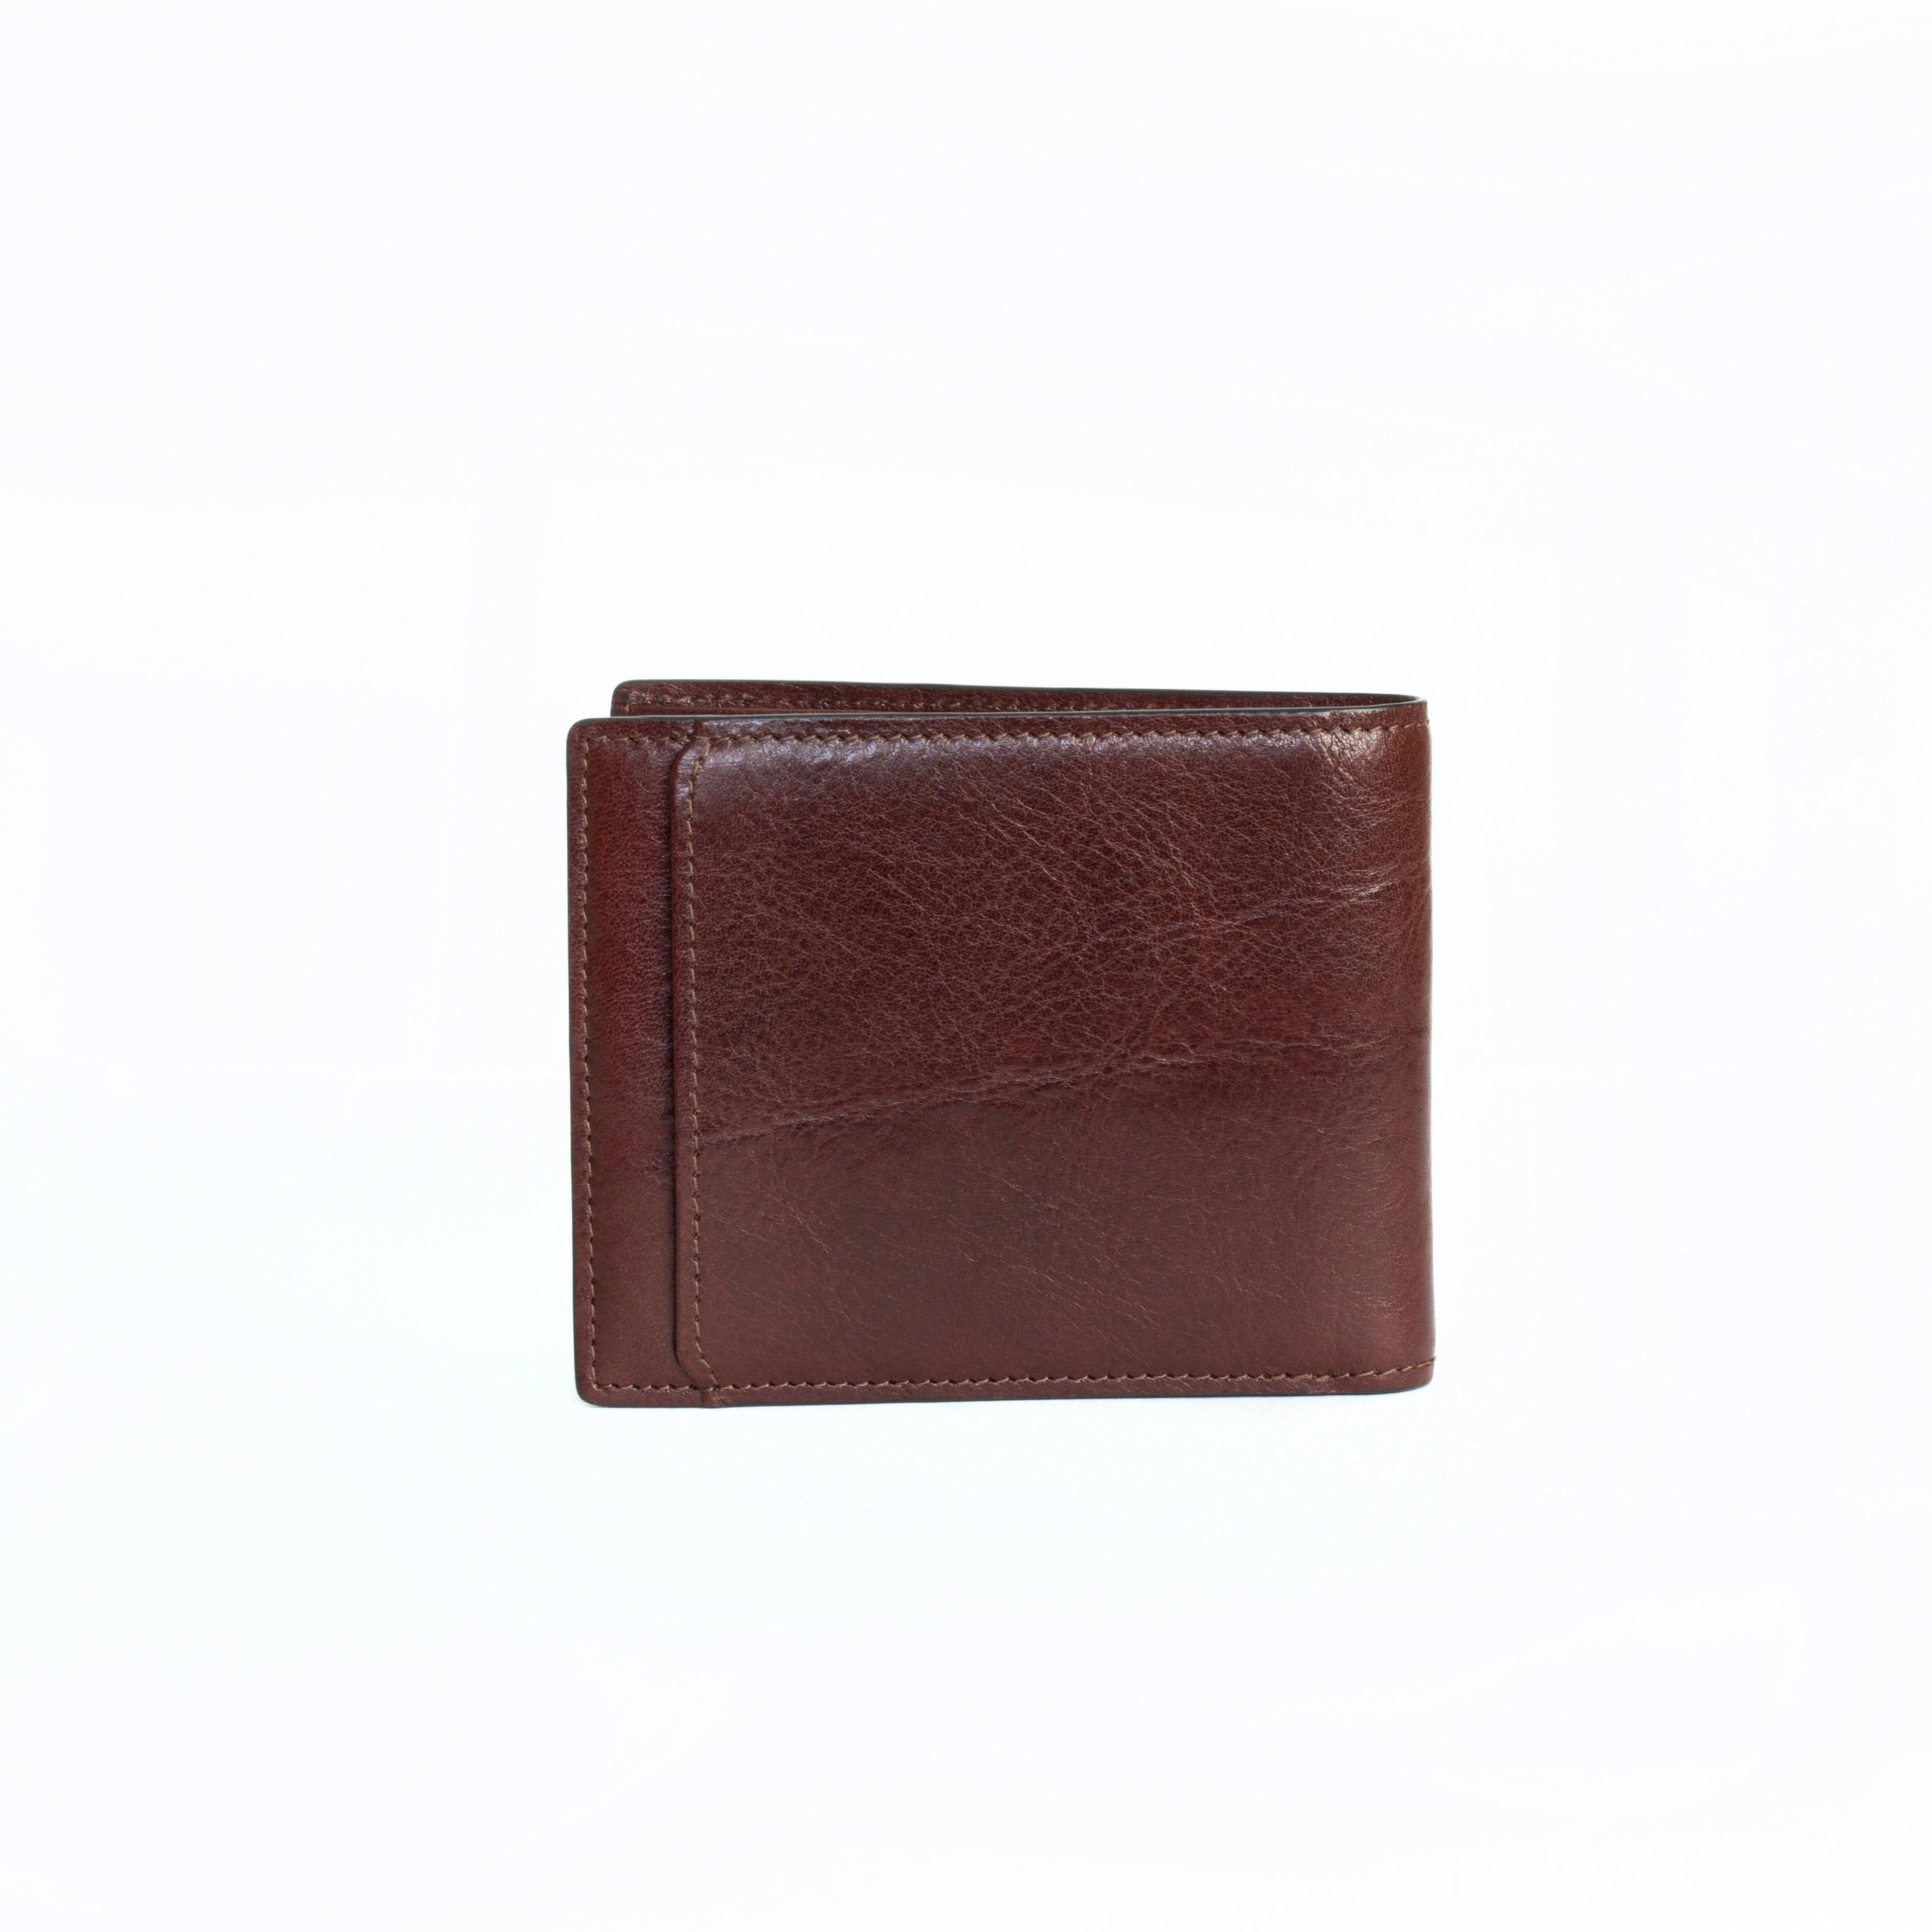 Becker Leather Billfold Wallet